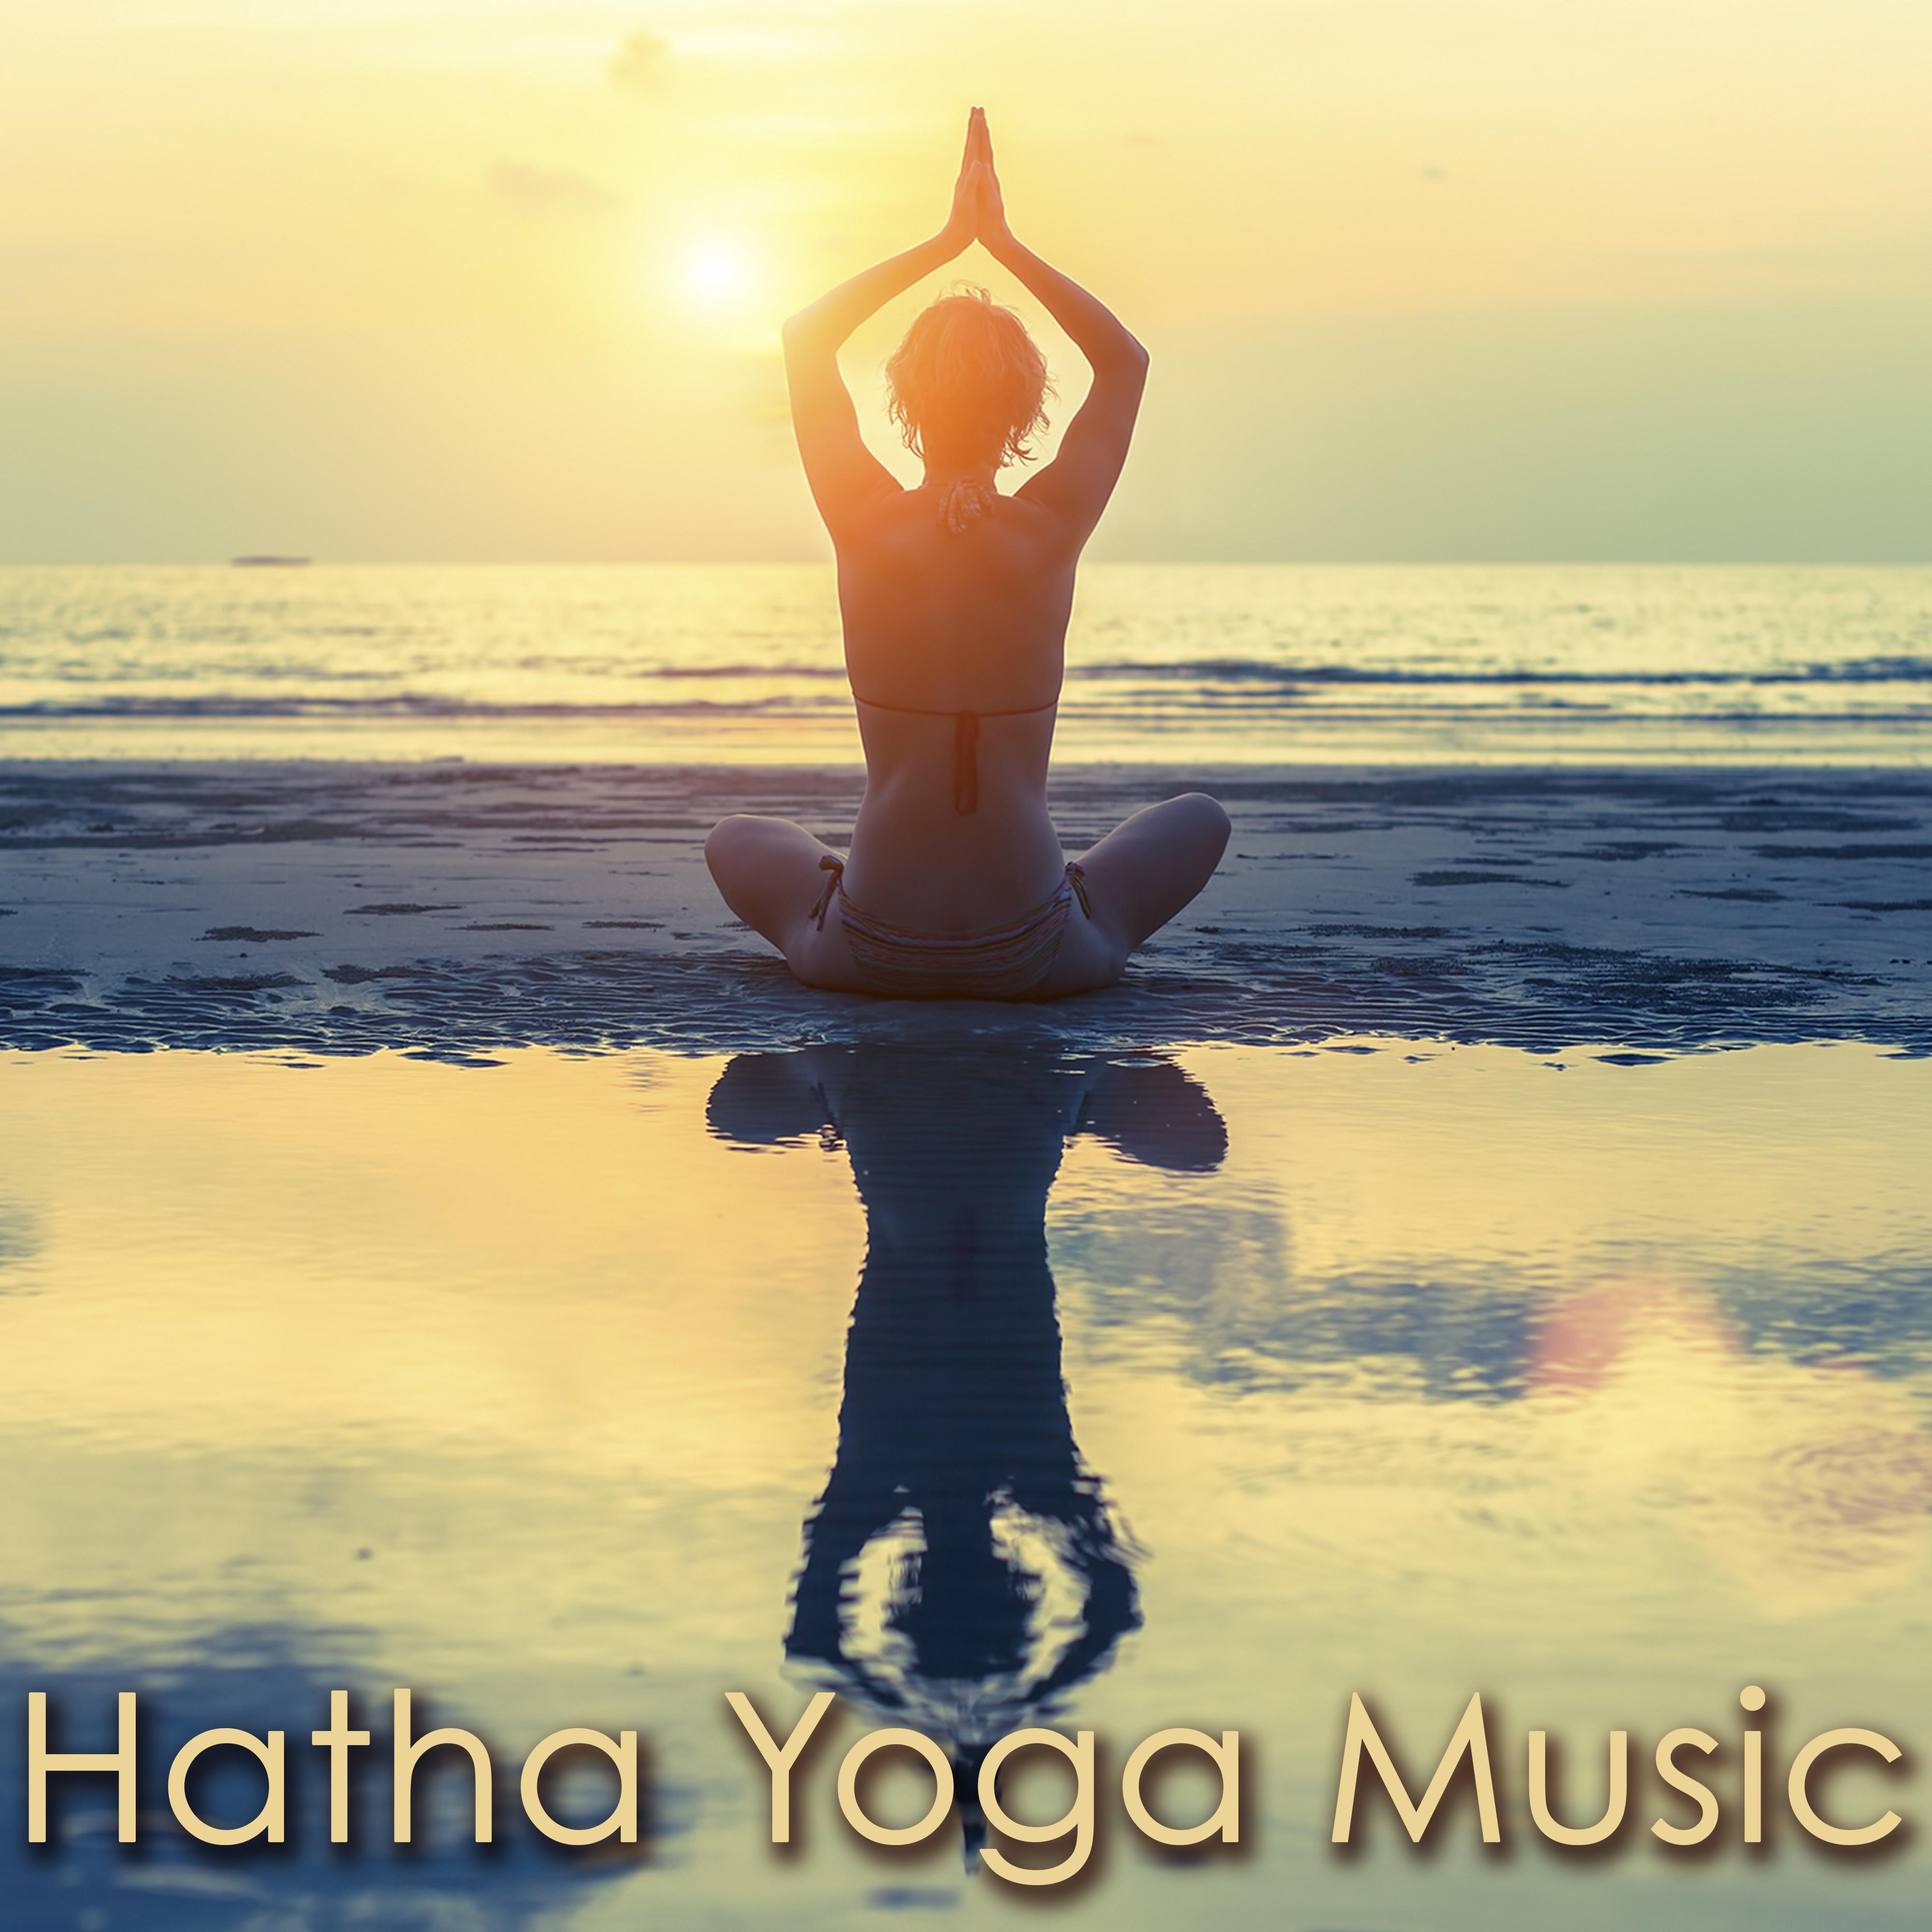 Hatha Yoga Music  Yoga Postures, Pranayama  Meditation Peaceful Songs for Your Yoga Zen Space